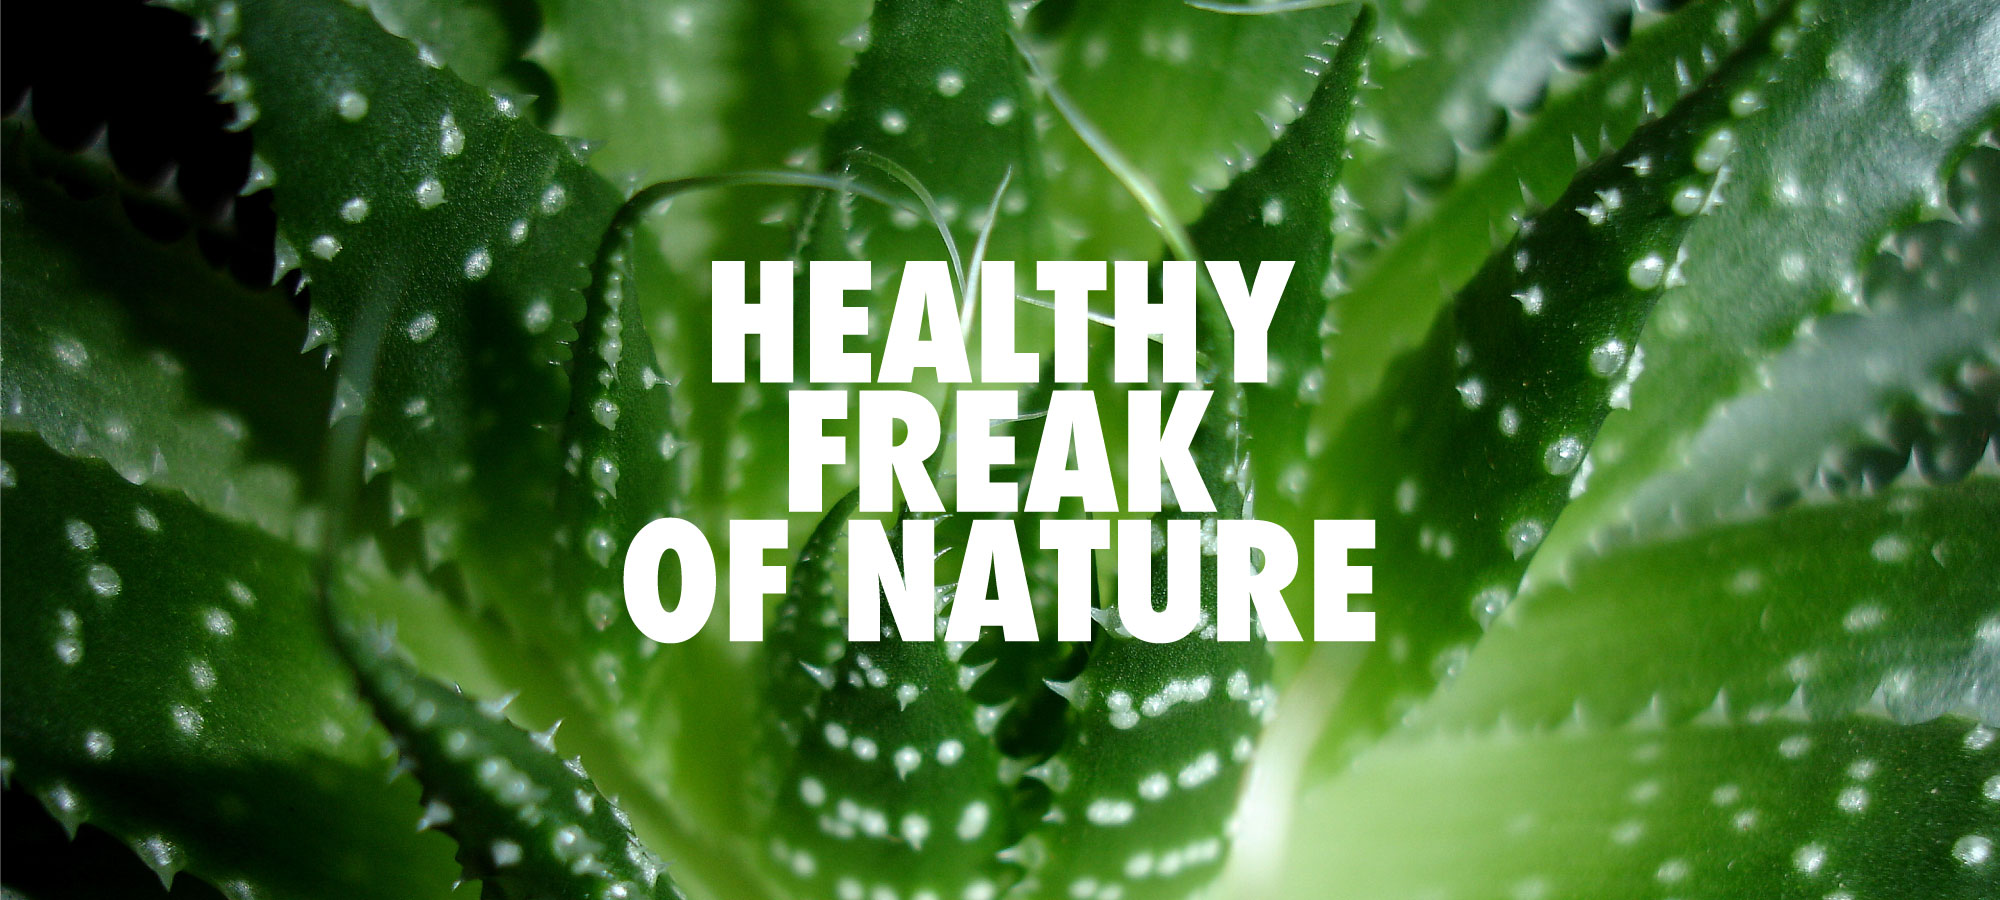 healthy freak of nature